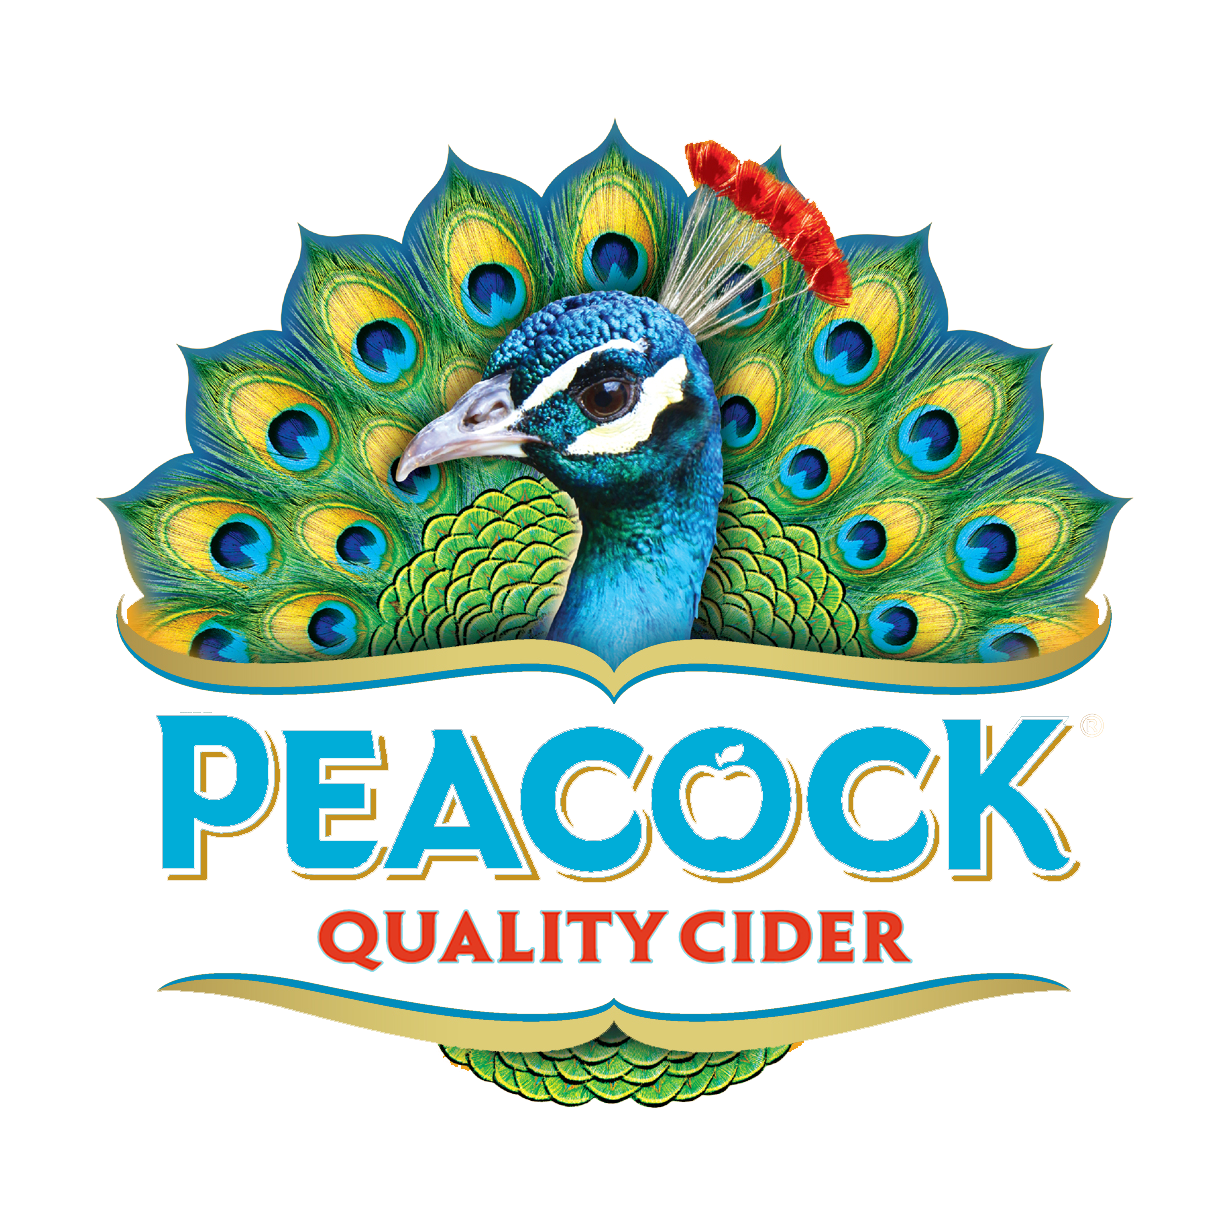 Peacock Cider